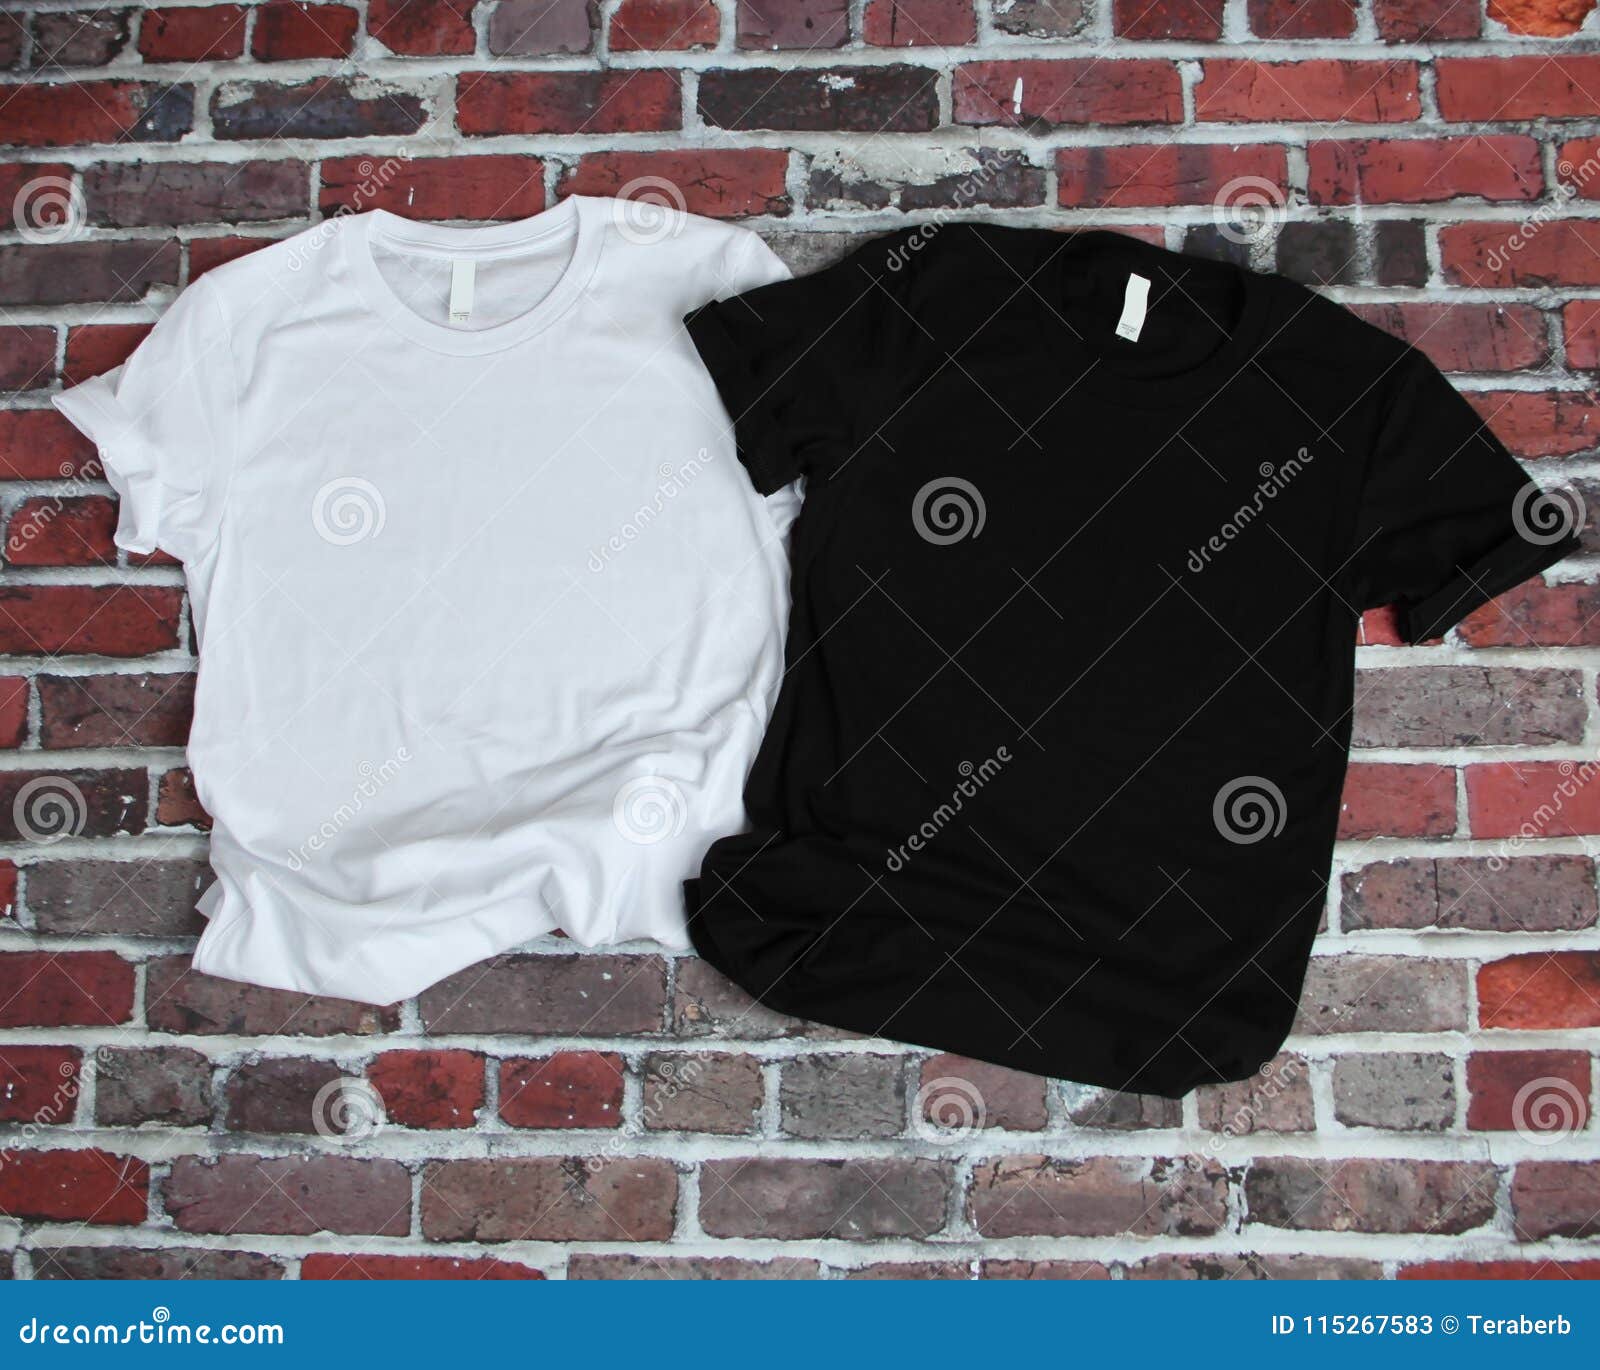 flat lay mockup of white tshirt and black tshirt on brick background